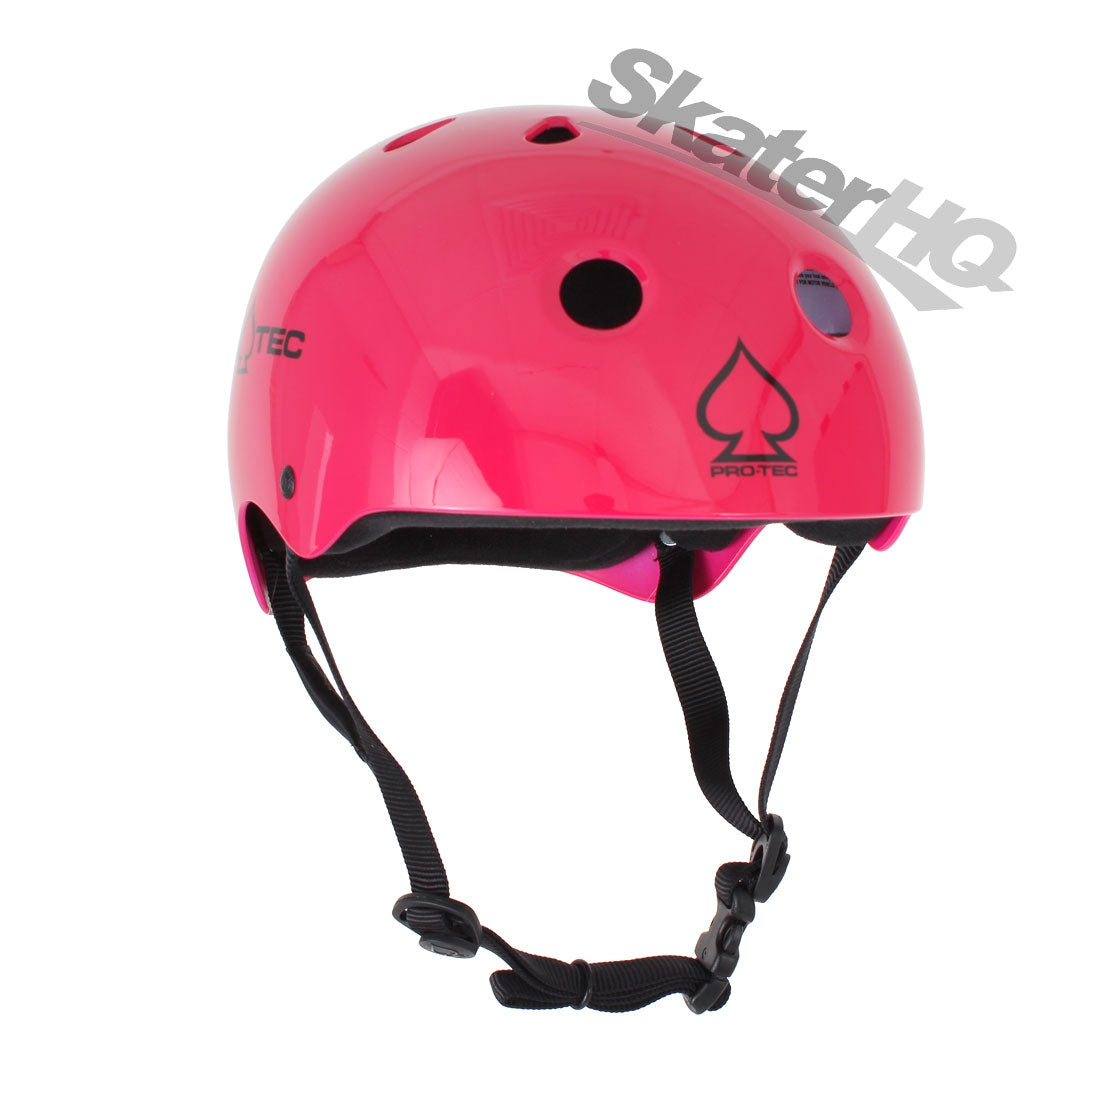 Pro-Tec Classic Skate Gloss Pink - Medium Helmets